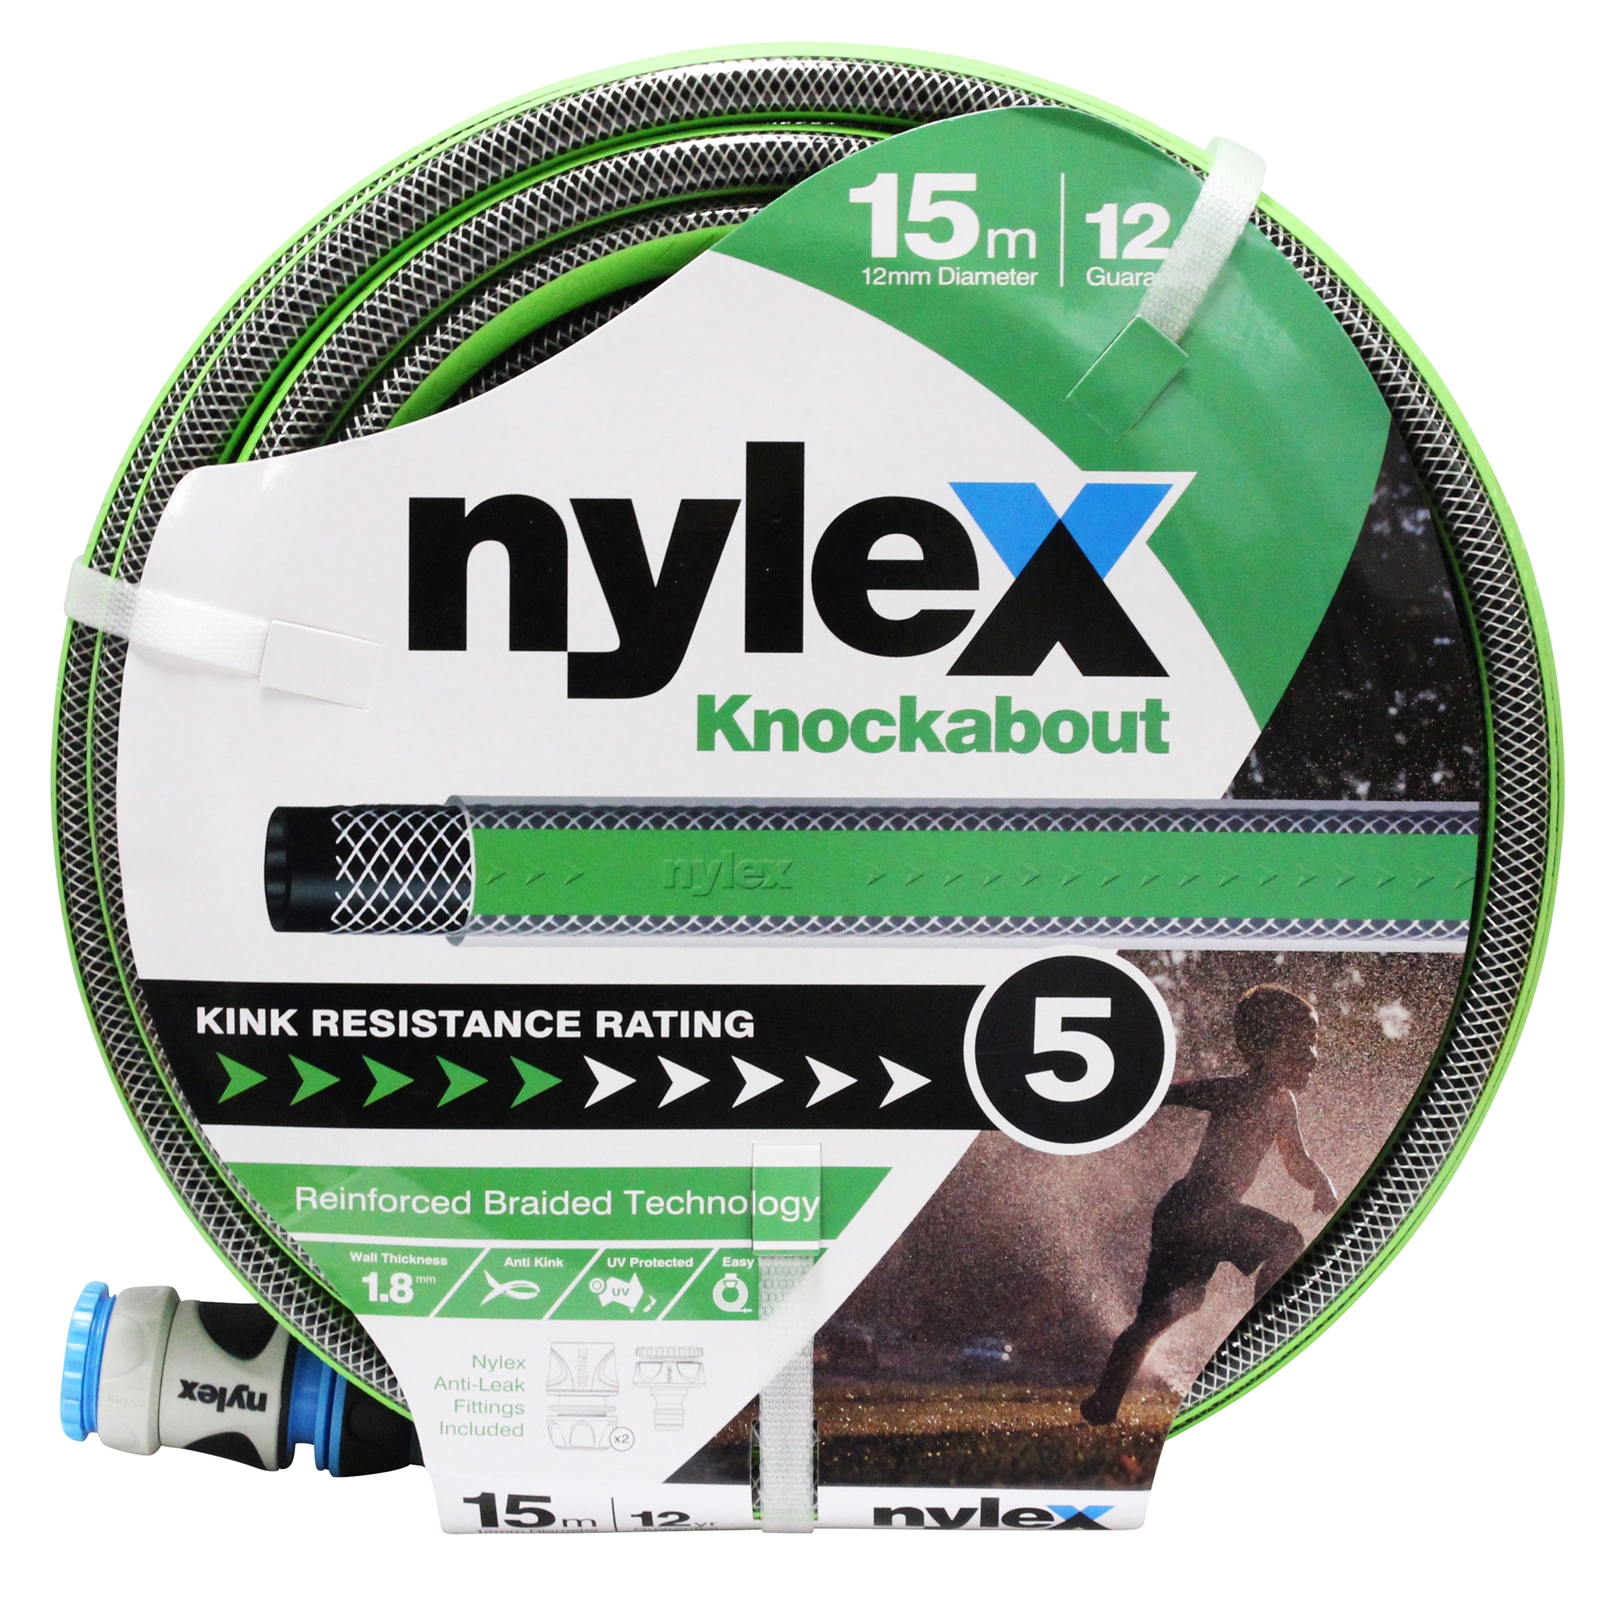 Nylex 12mm x 15m Knockabout Garden Hose